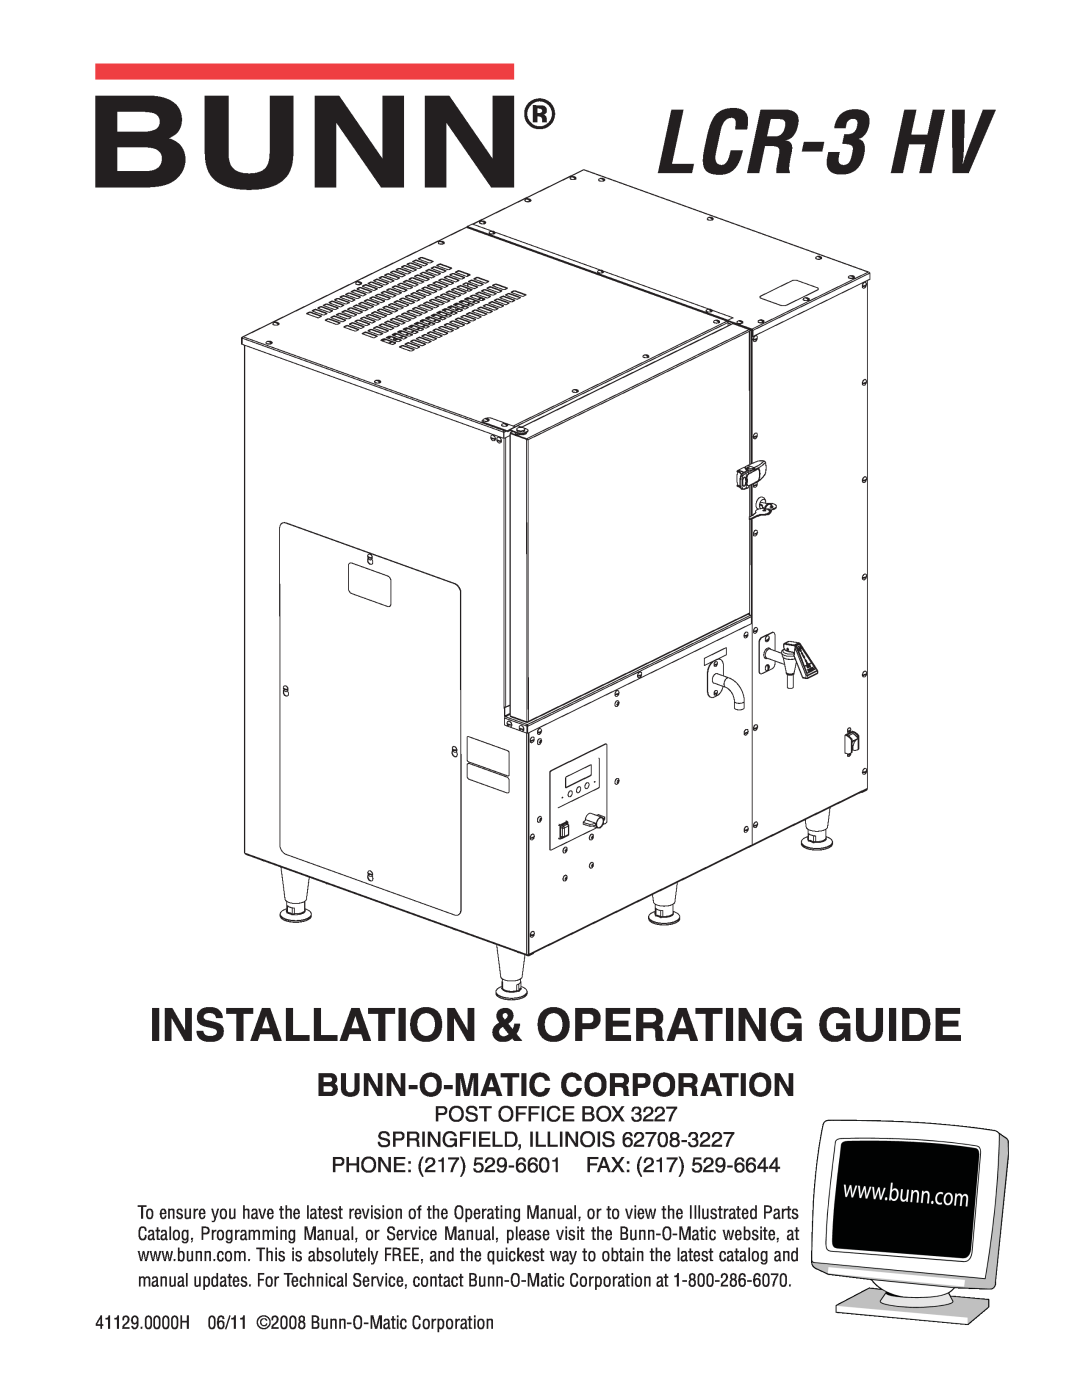 Bunn service manual LCR-3HV, Installation & Operating Guide, Bunn-O-Maticcorporation 